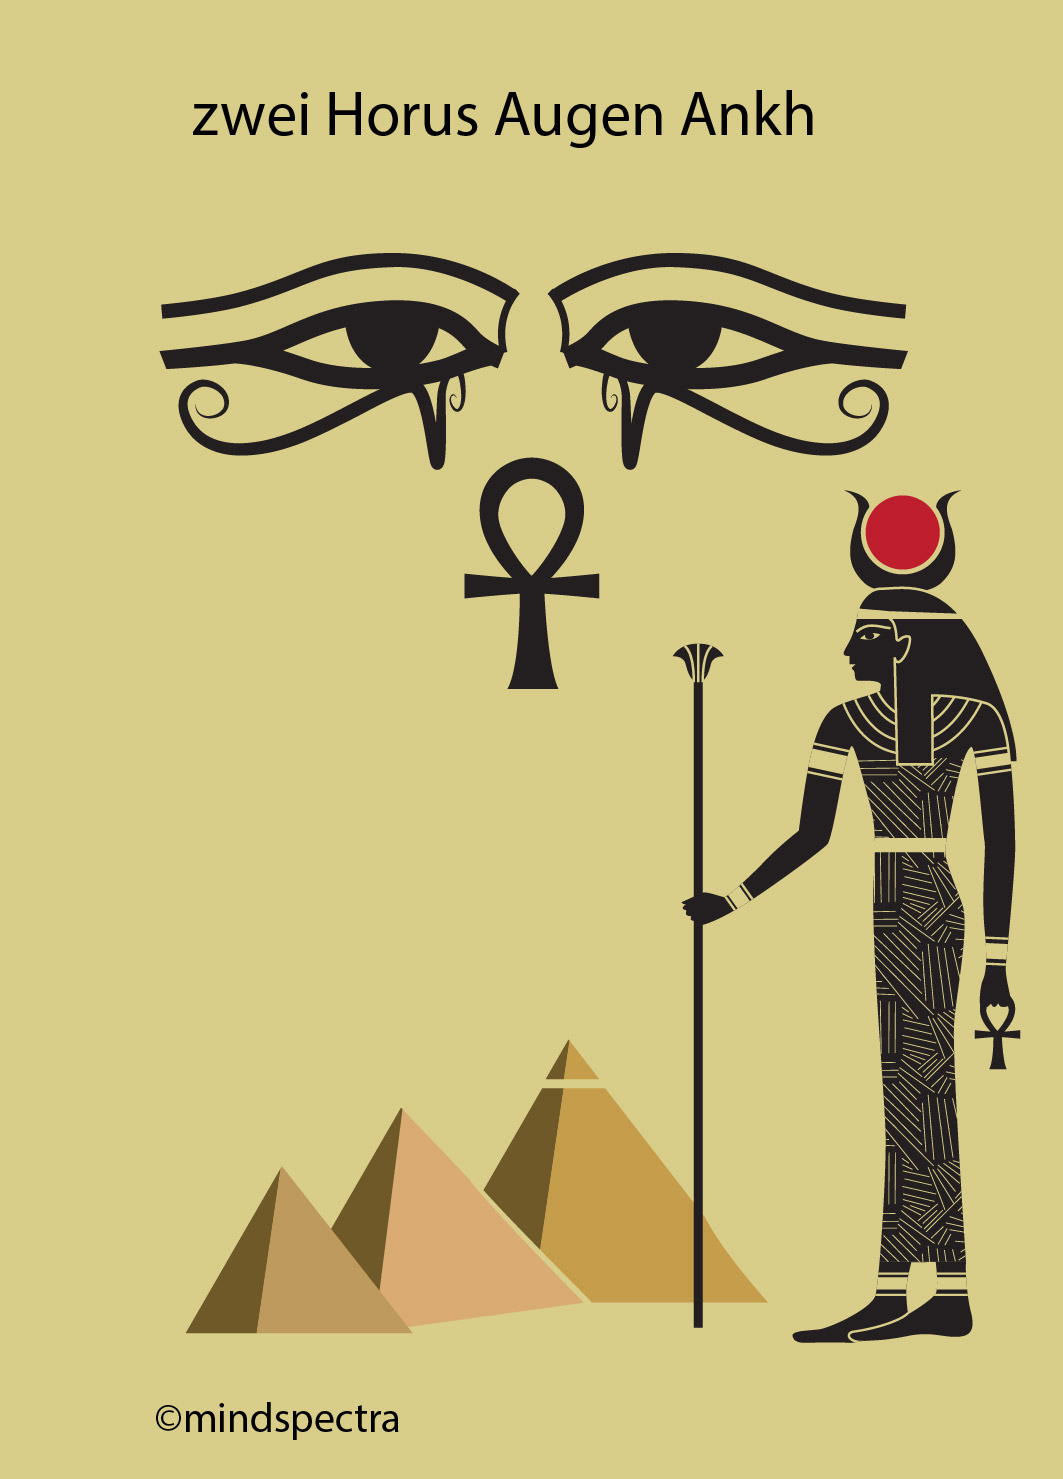 Zwei Horus-Augen Ankh